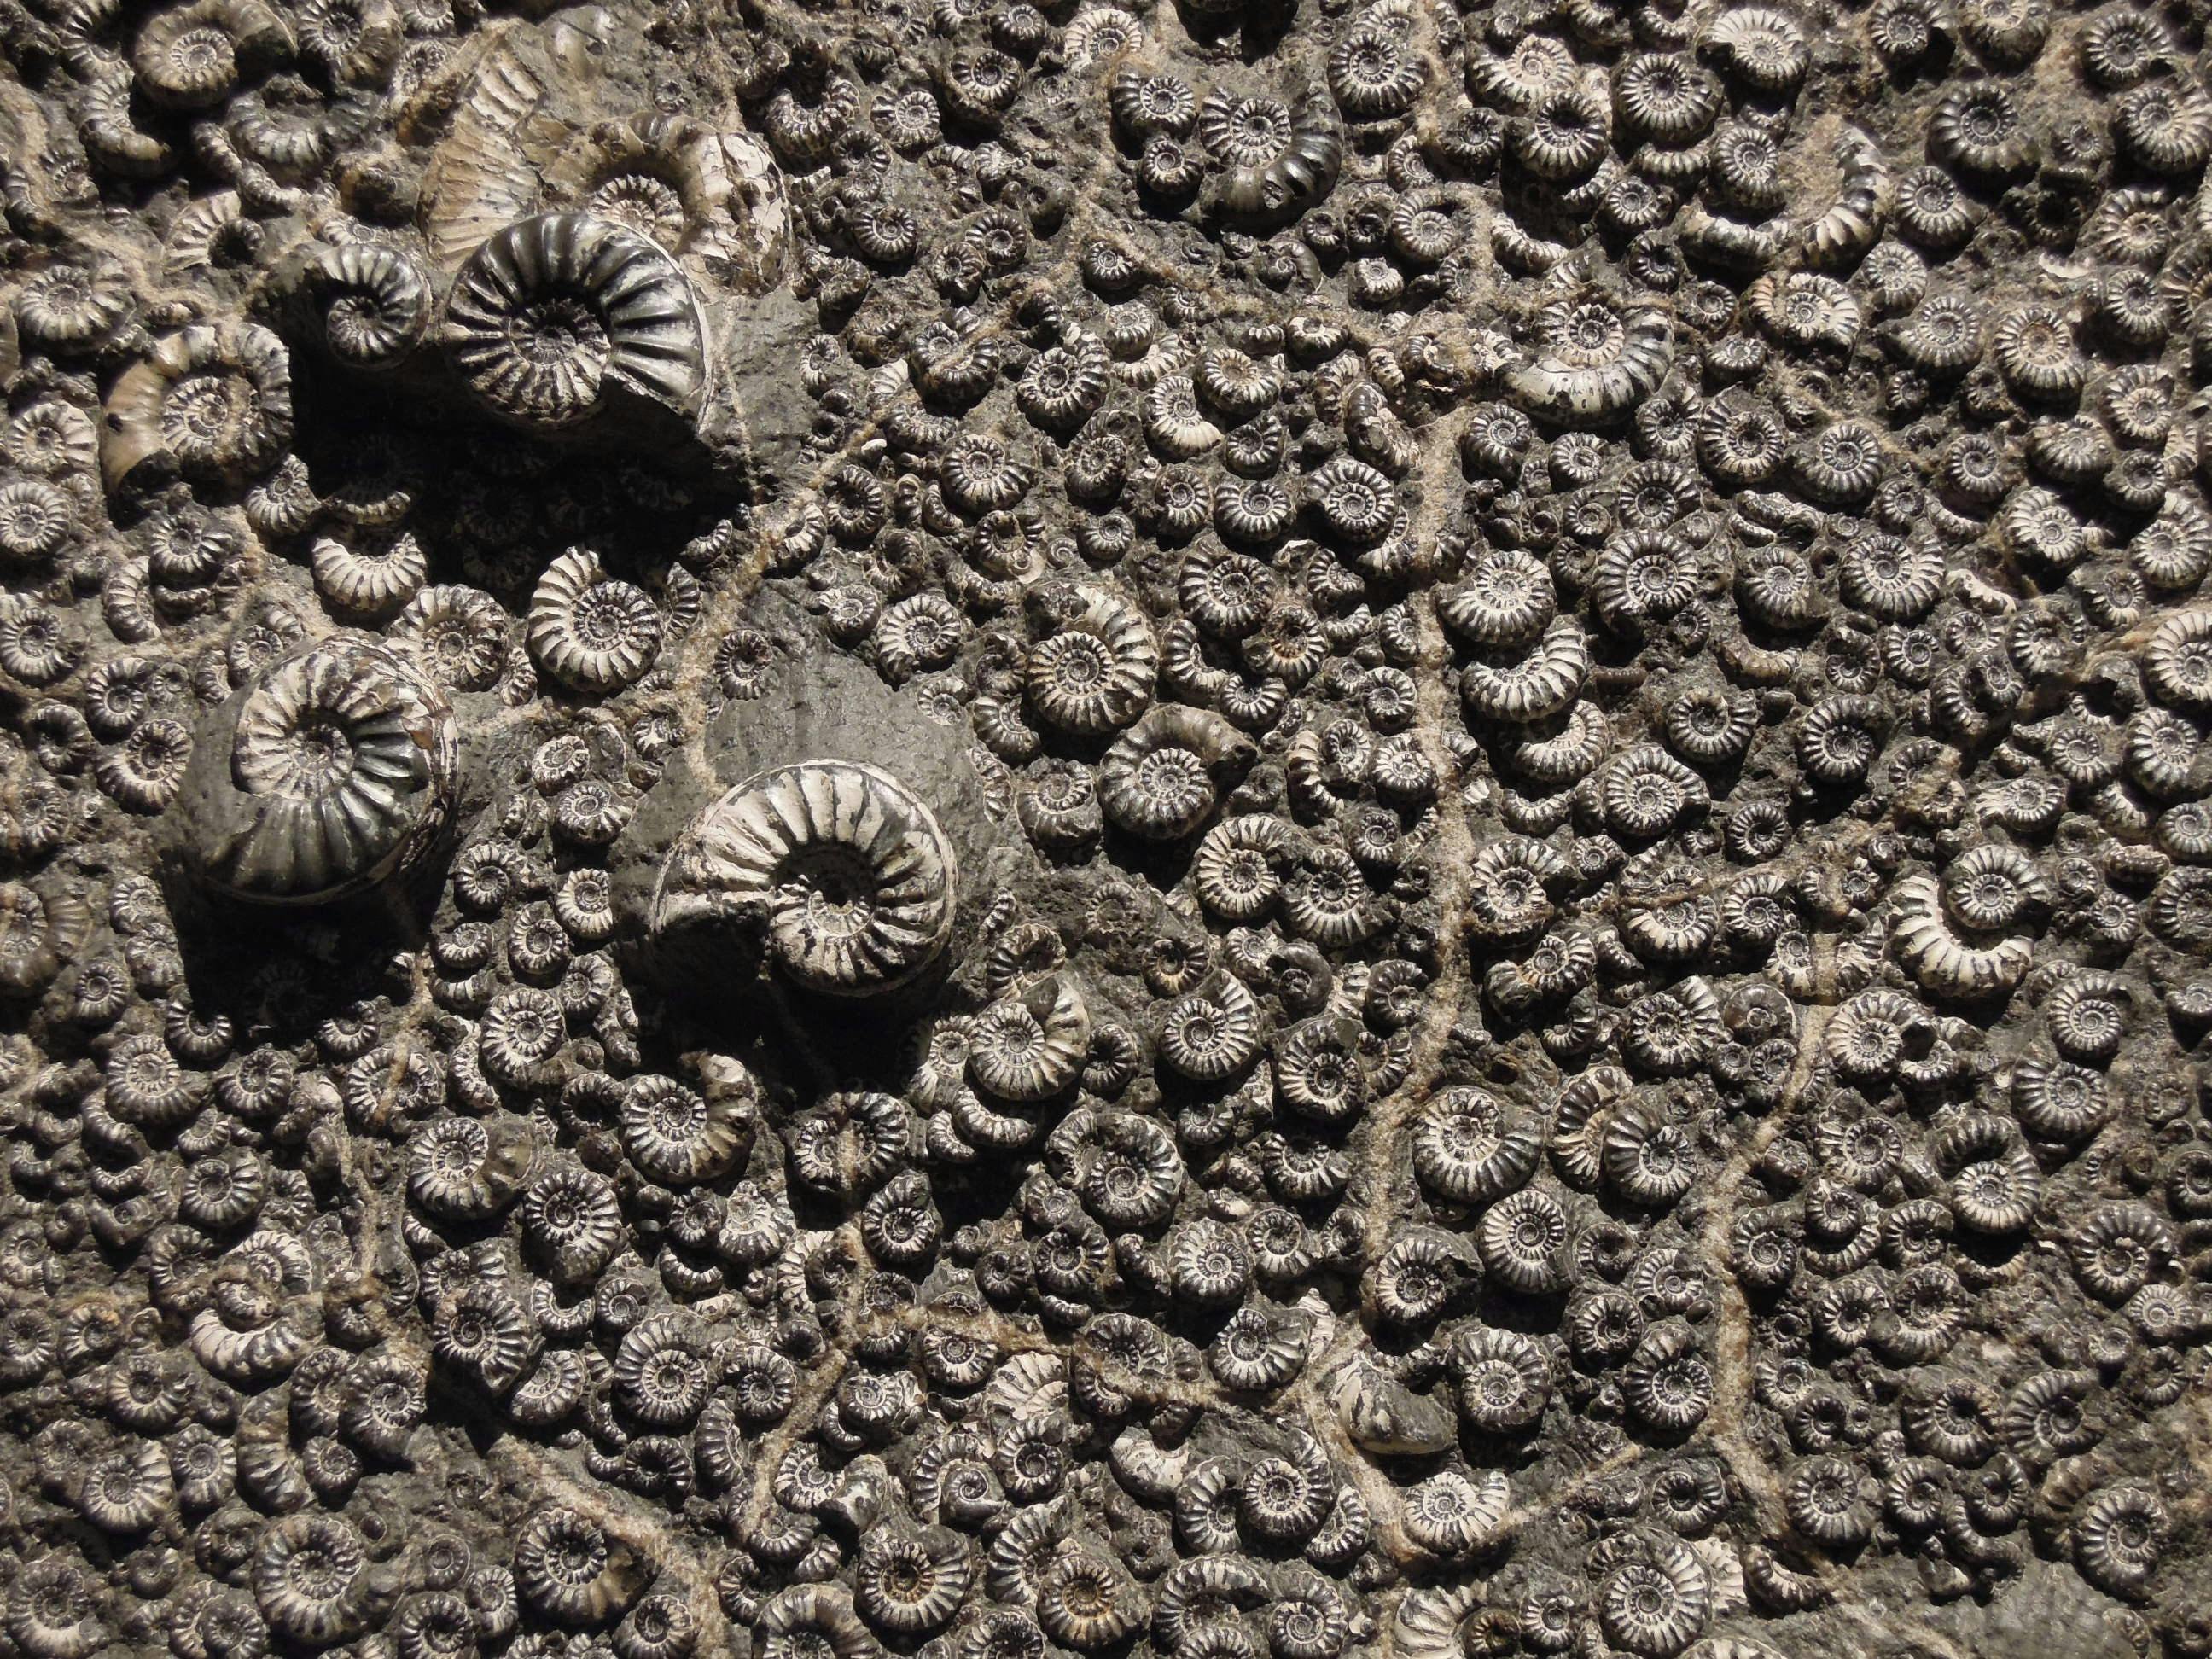 Multiple sea fossils encased in stone.